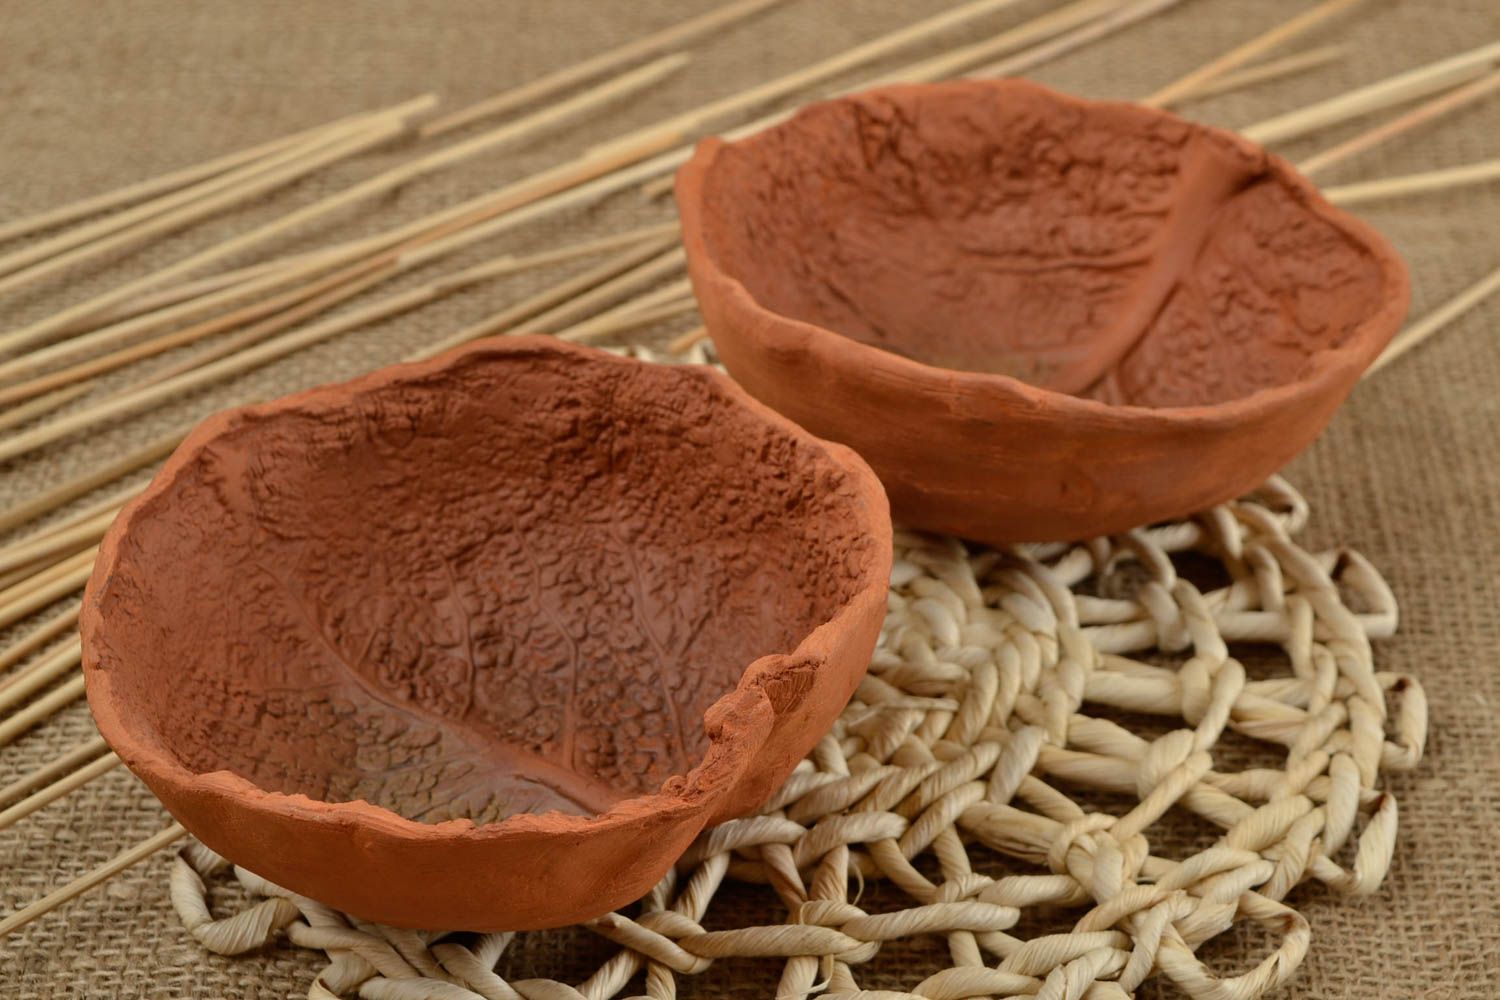 Handmade ceramic bowl clay salad bowl table setting ideas kitchen design photo 1